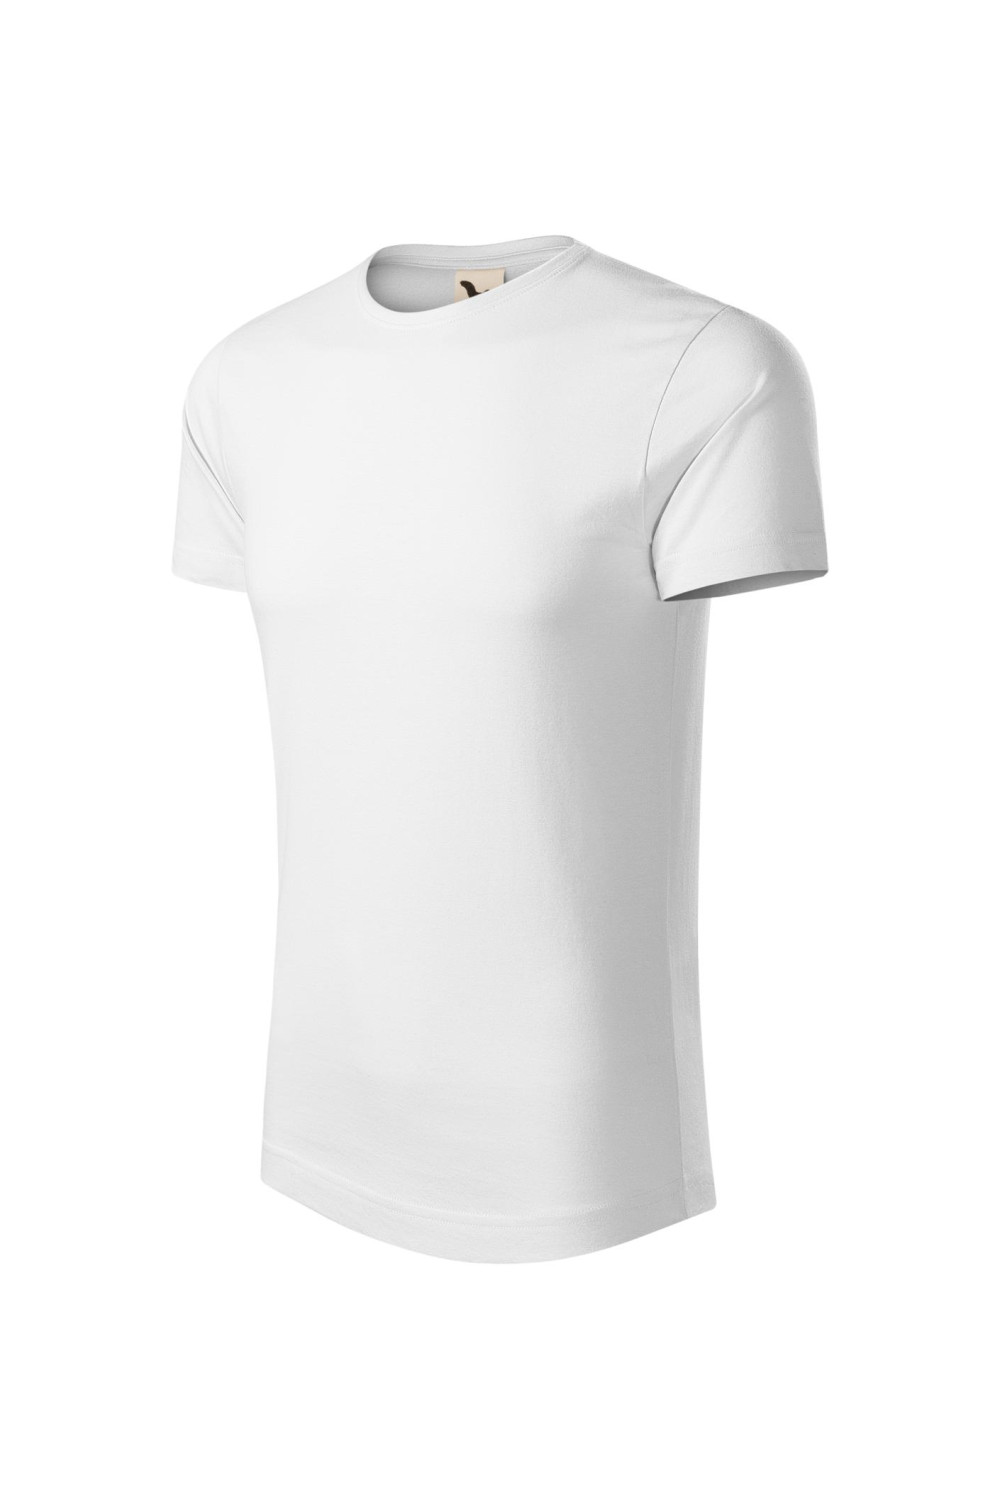 ORIGIN (GOTS) 171 MALFINI ADLER Koszulka męska t-shirt biały